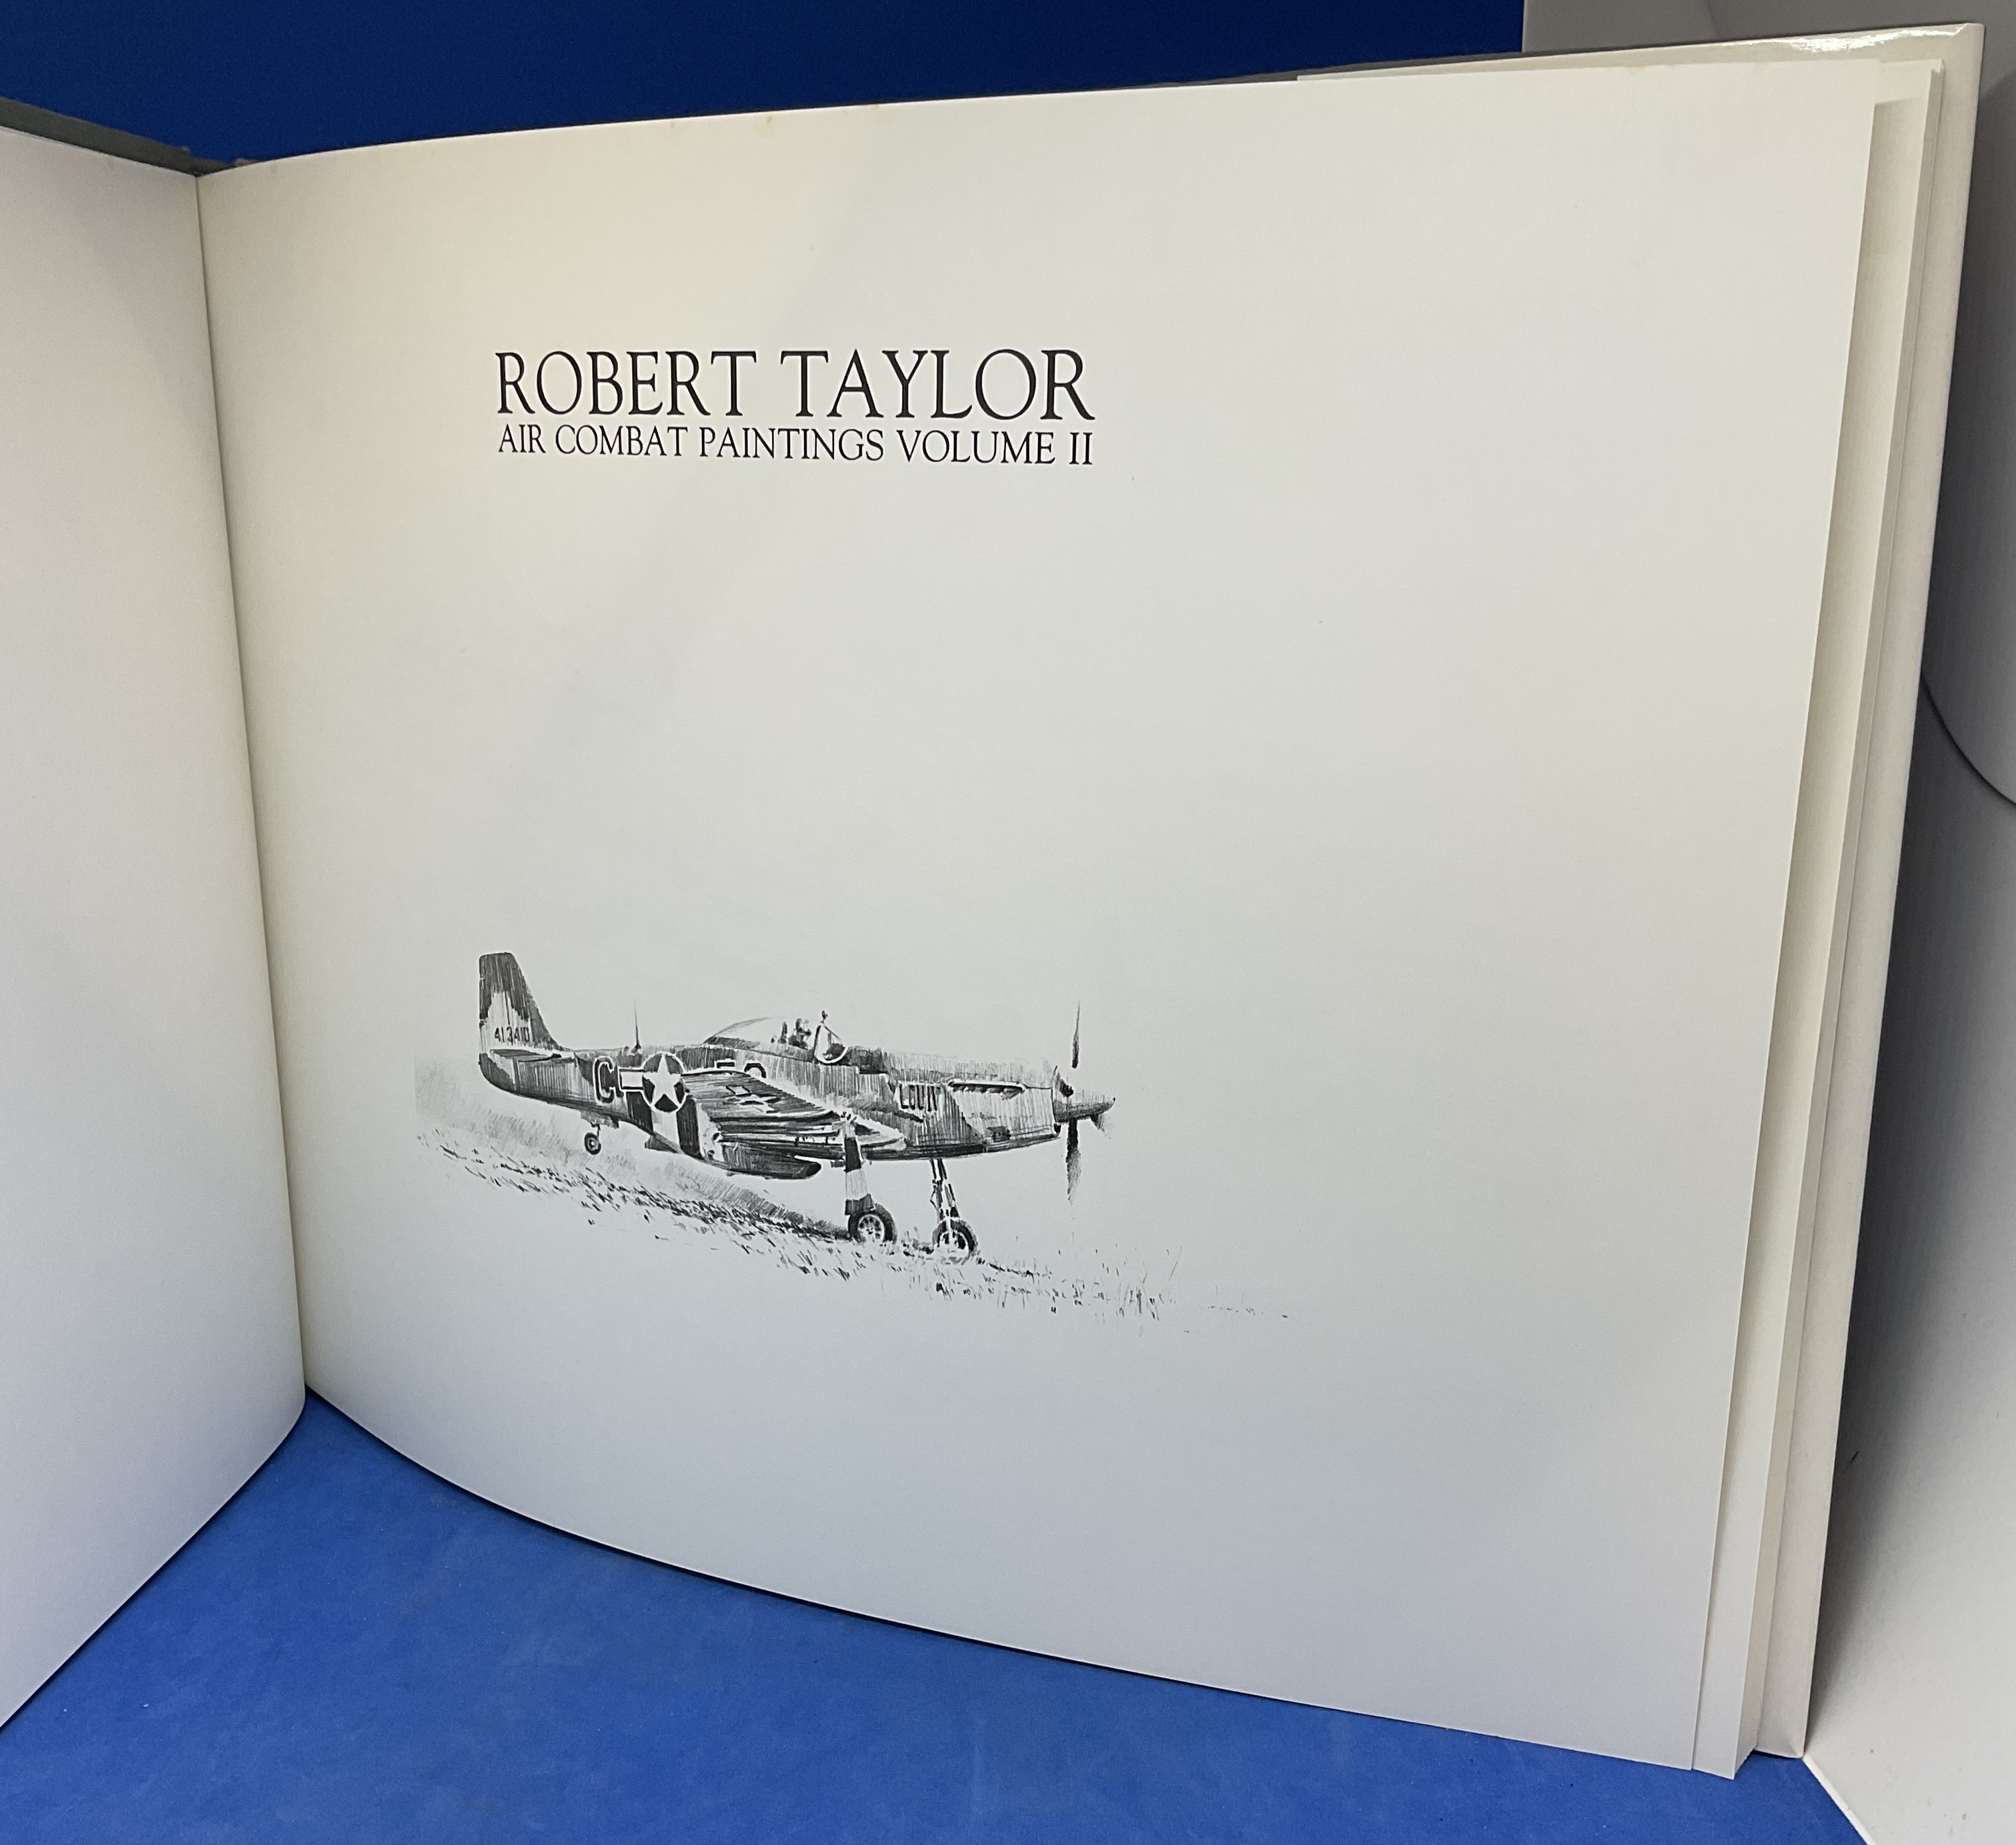 Robert Taylor Air Combat Paintings Vol 2 by Charles Walker and Robert Taylor. 1st Edition Hardback - Image 2 of 2